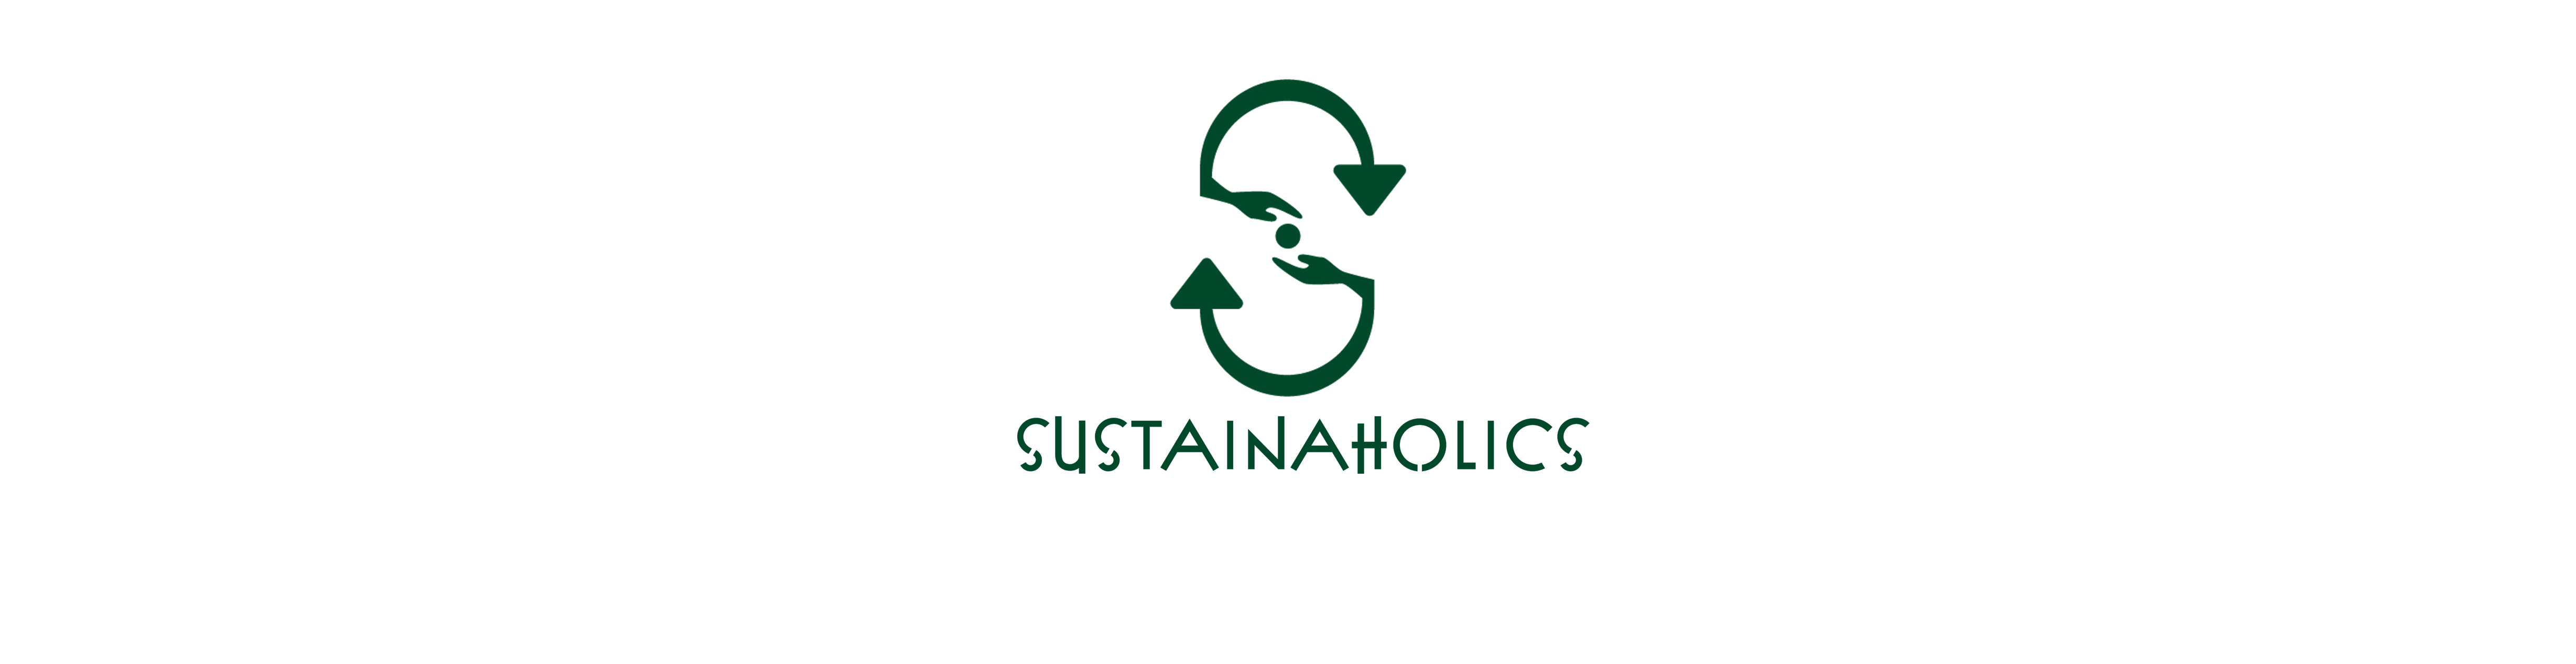 Logo-sustainaholics.png